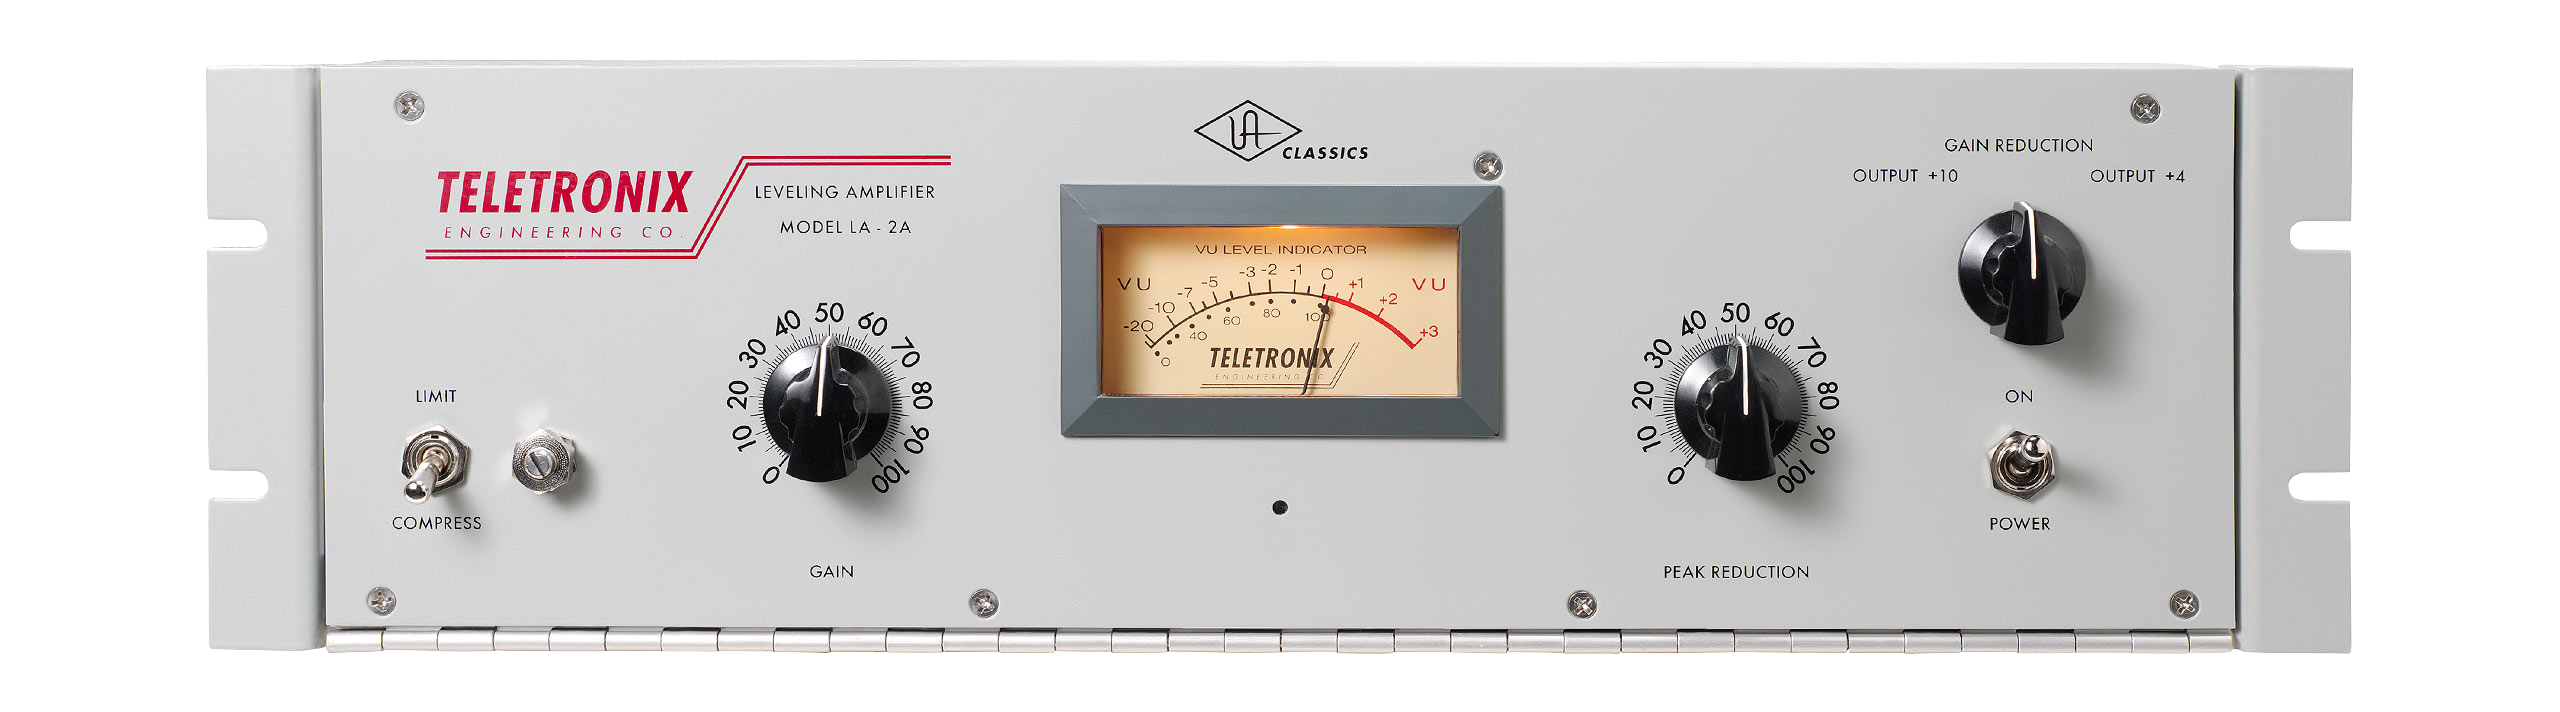 Teletronix la 2a leveling amplifier